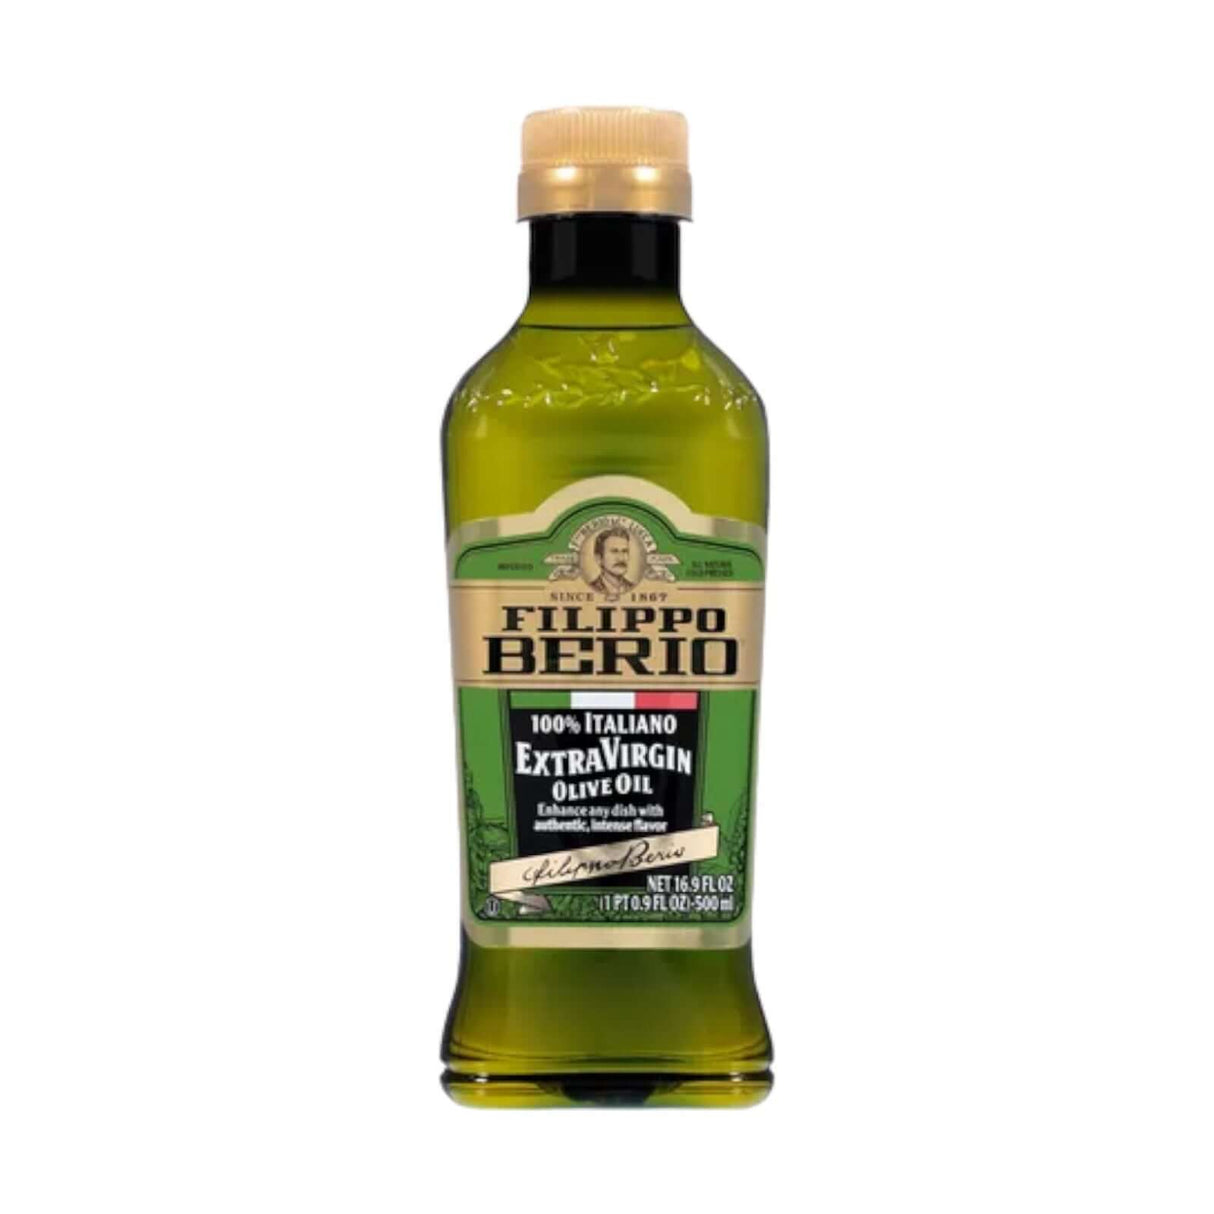 Filippo Berio 100% Italiano Extra Virgin Olive Oil